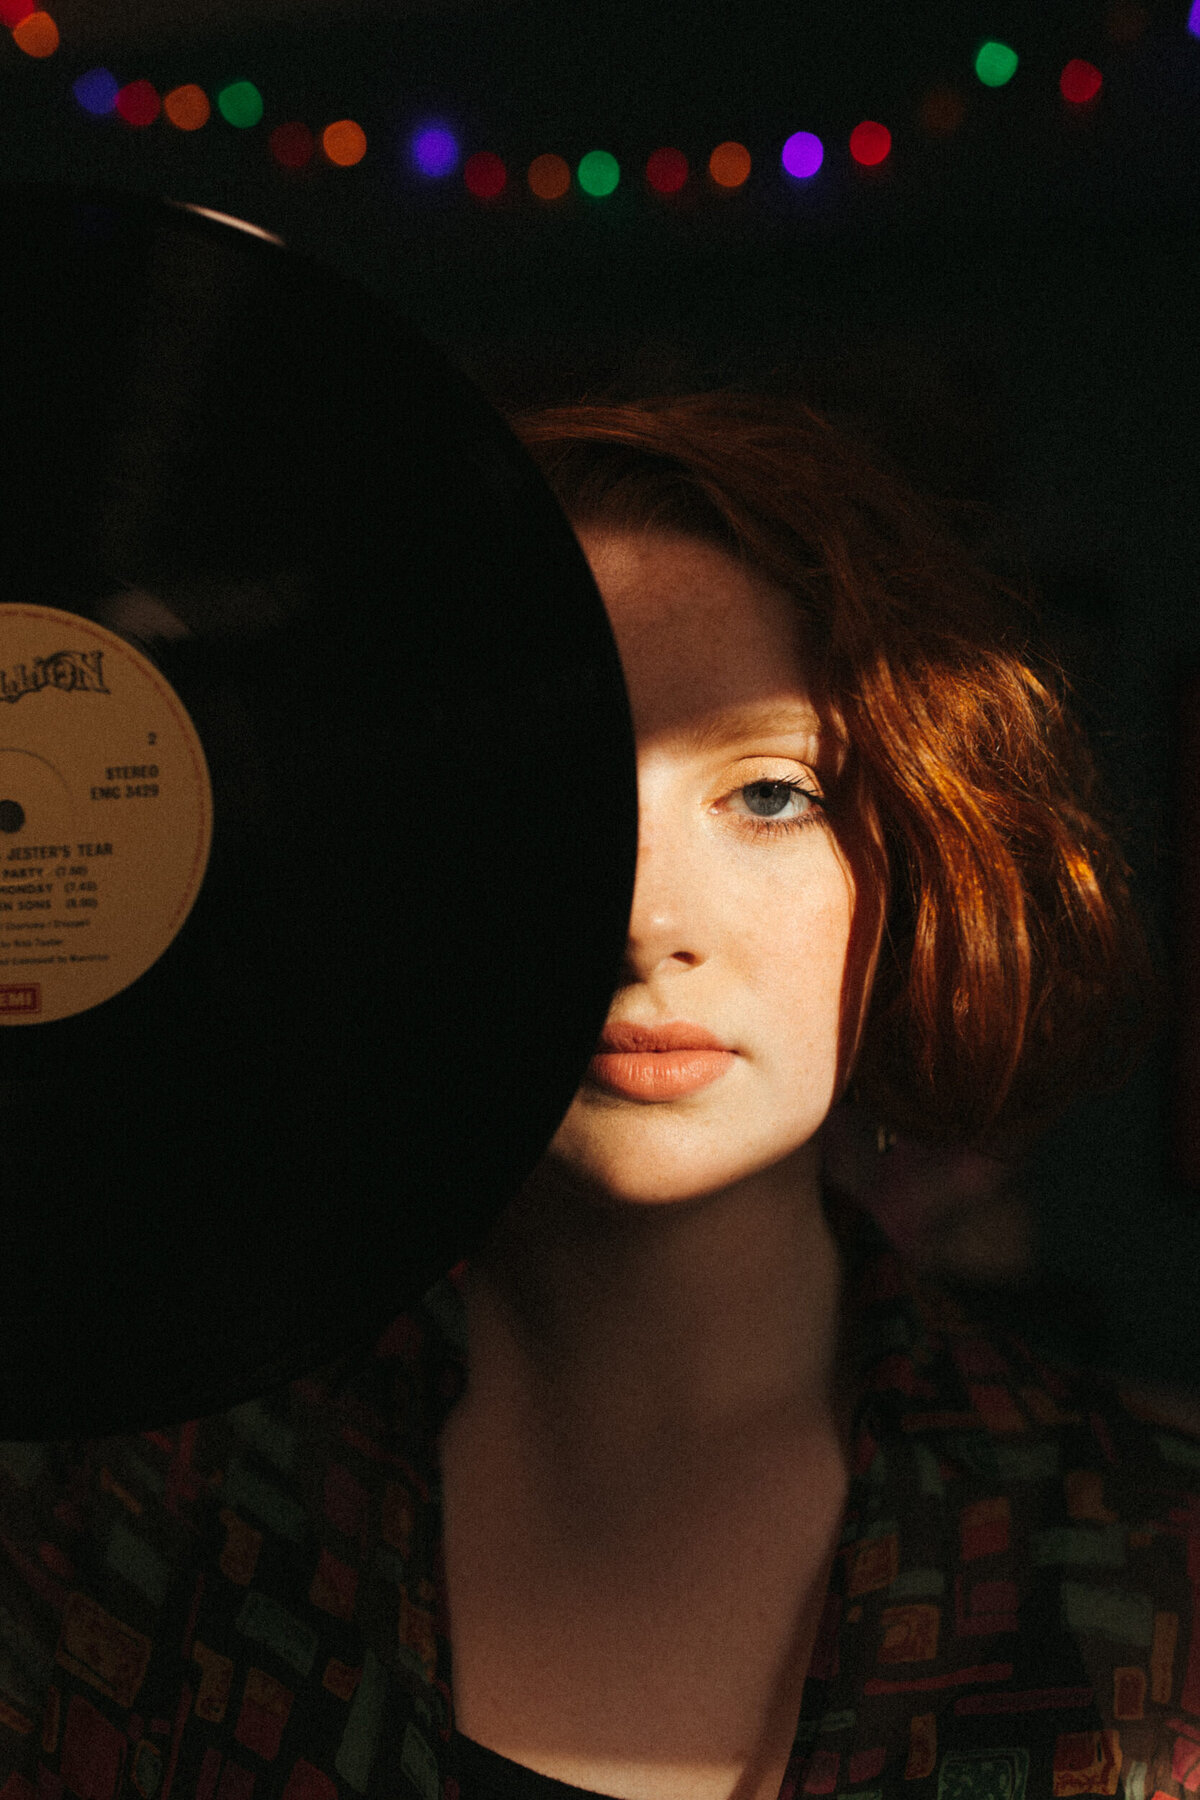 High school senior girl in record store holding vinyl over half of her face